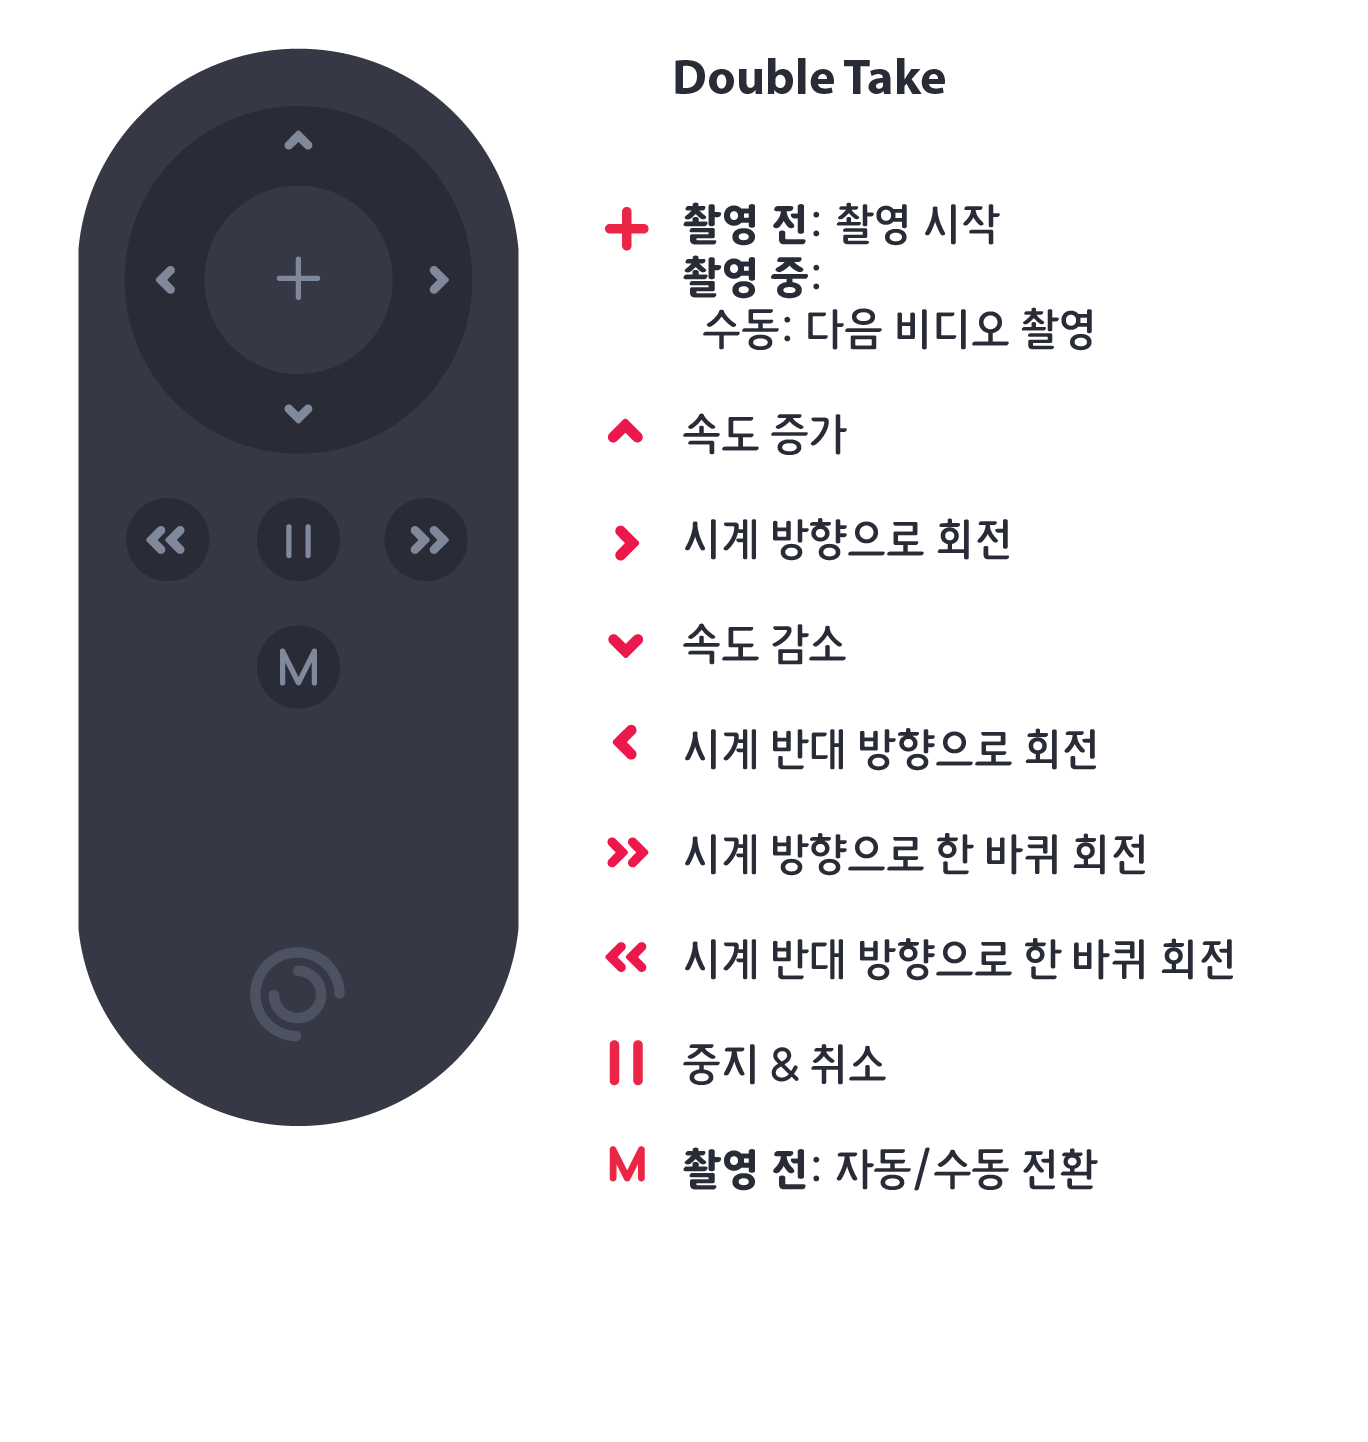 Remote_guides_KR_Dobule_Take.png